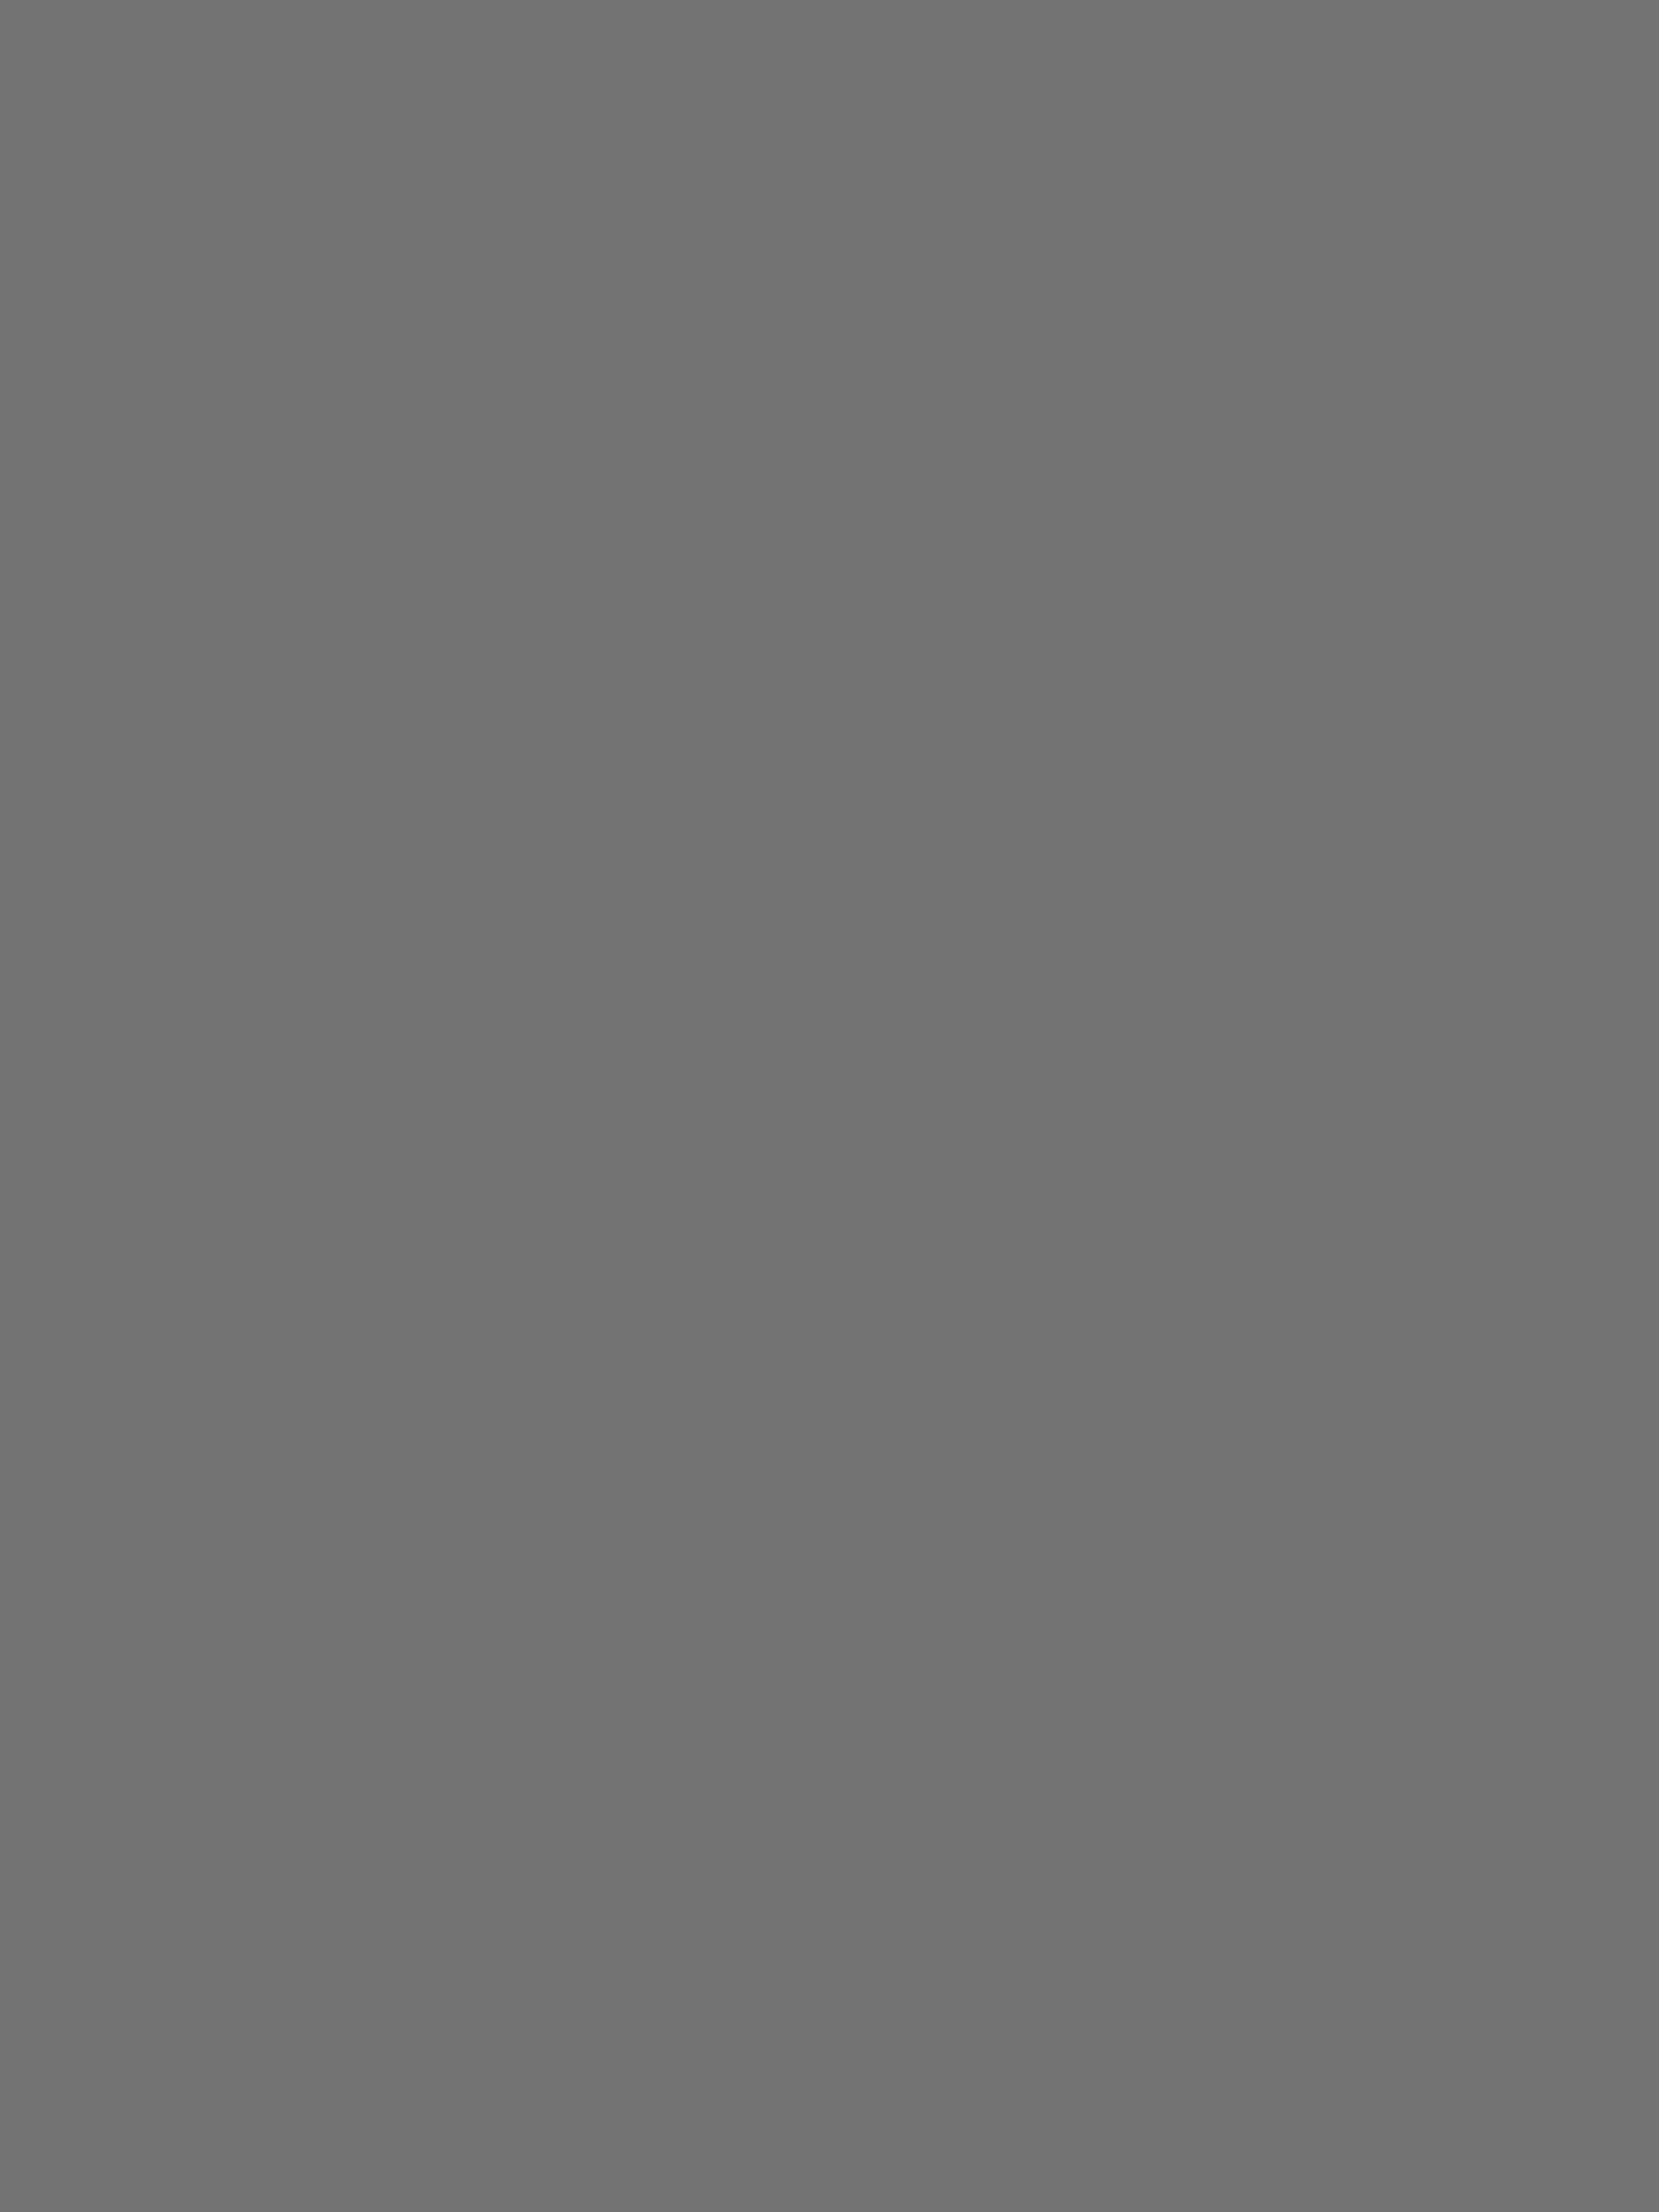 Иван Бунин. Орел, 1889 год. Фотография: Музей И.А. Бунина, Орел